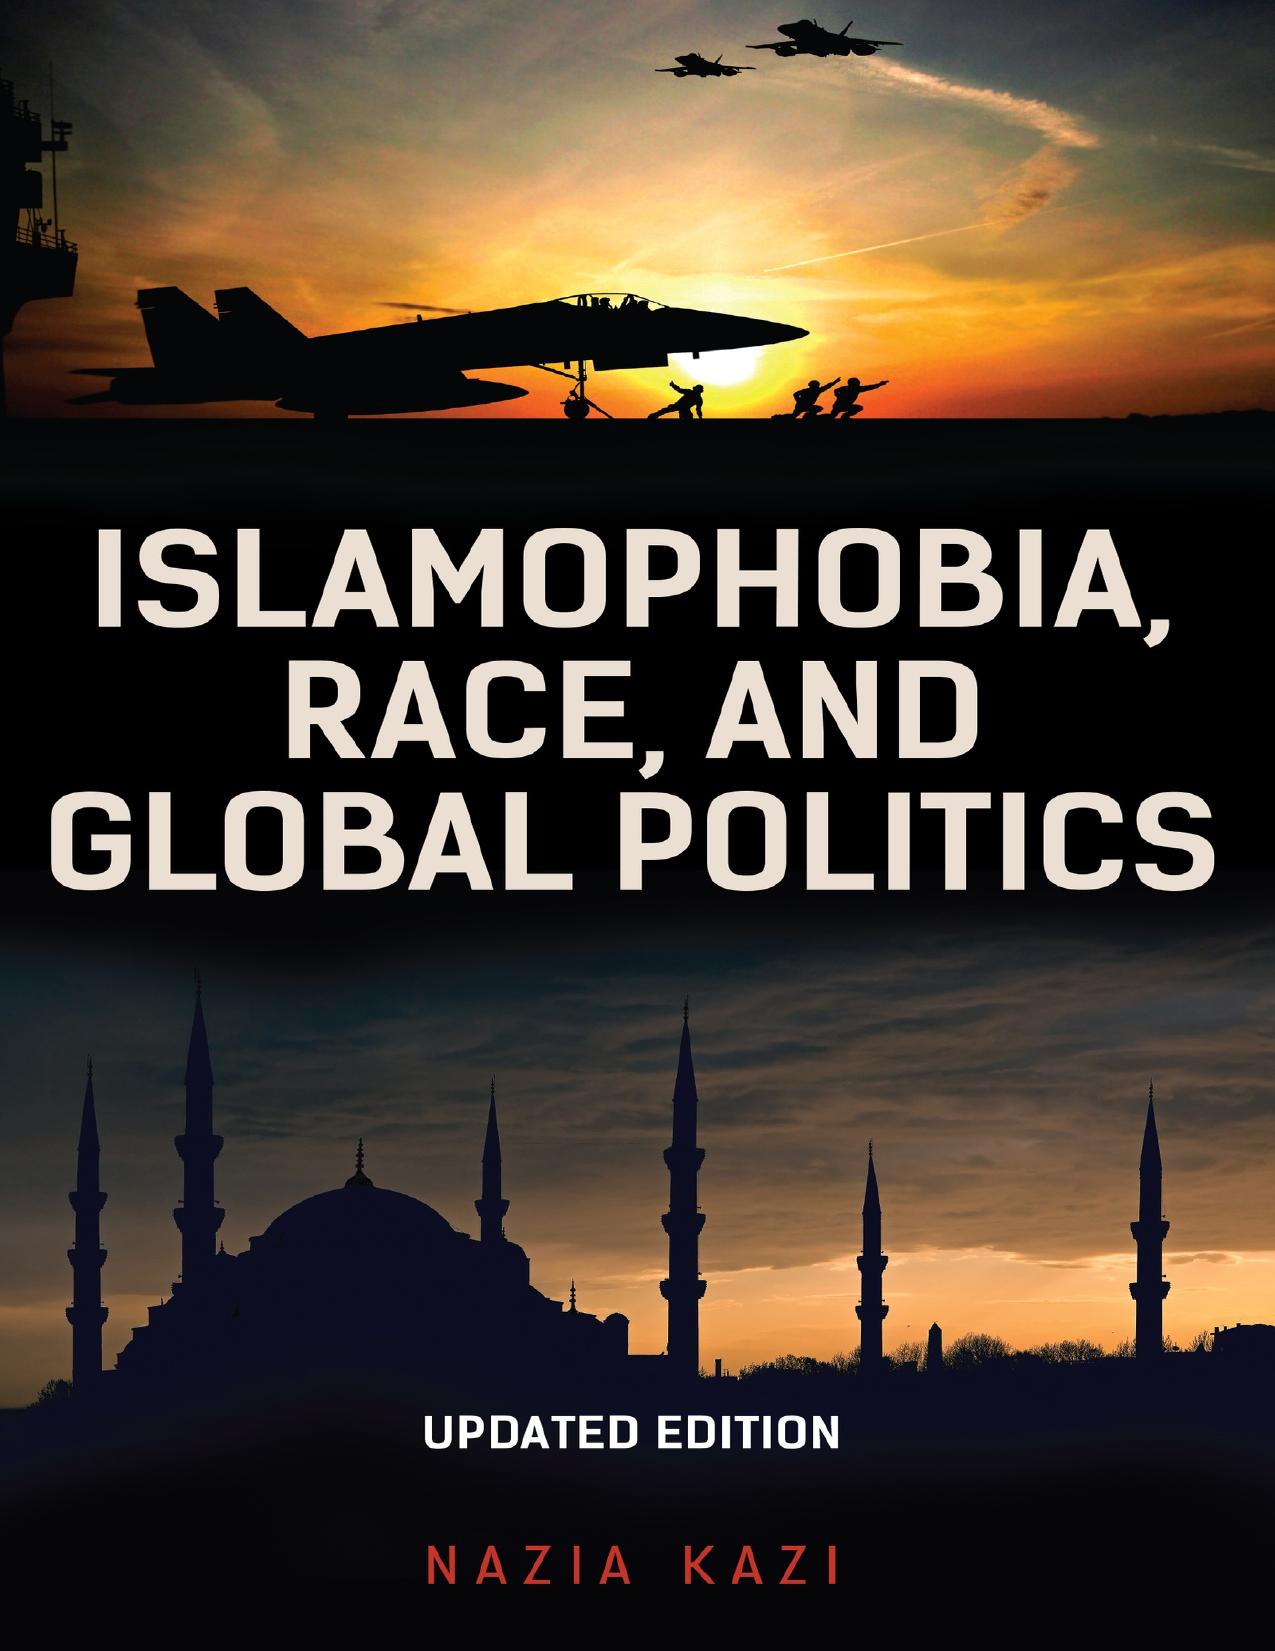 Islamophobia, Race, and Global Politics by Nazia Kazi